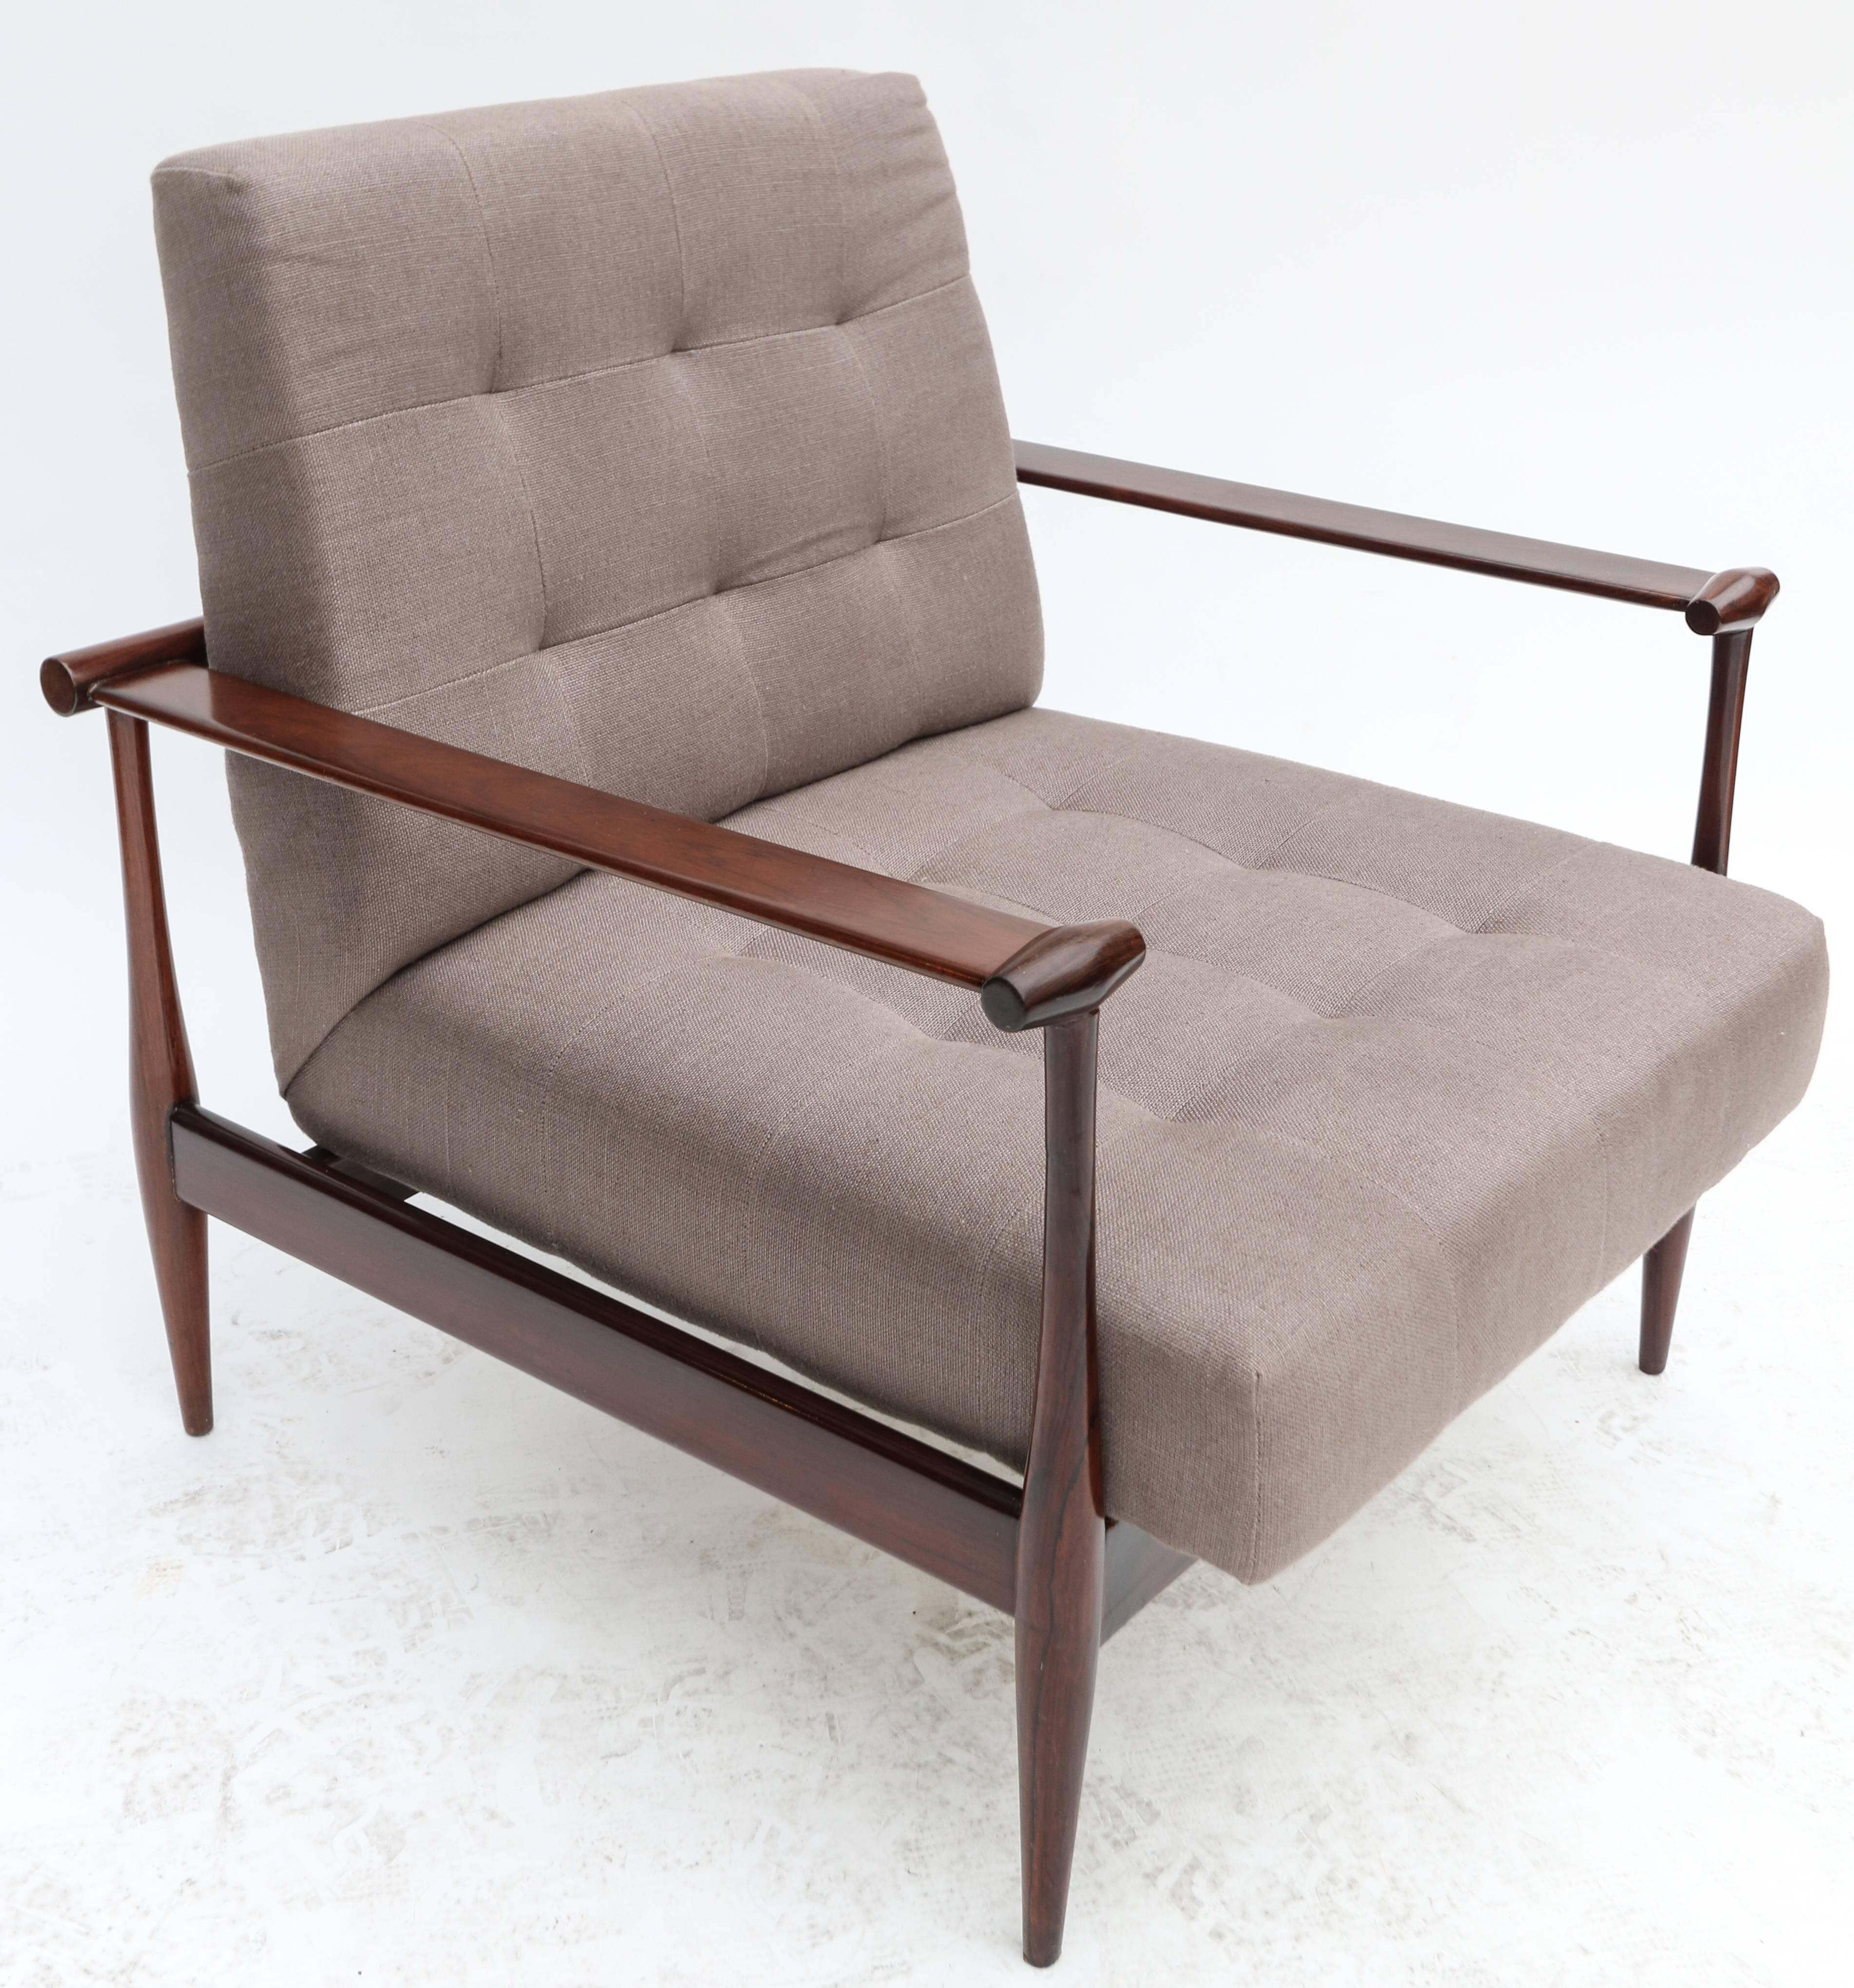 Pair of 1960s armchairs by Liceu de Artes in Brazilian jacaranda and upholstered in grey linen.